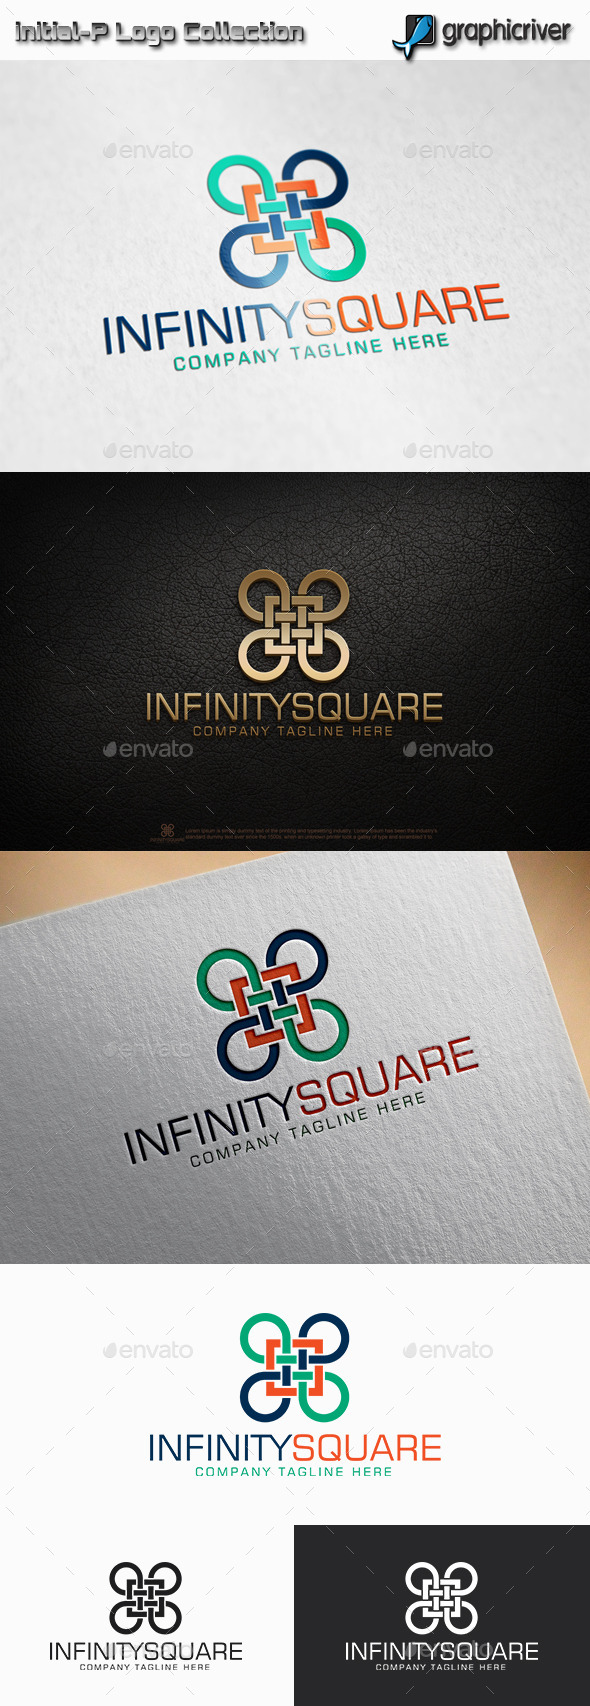 Infinity square  logo